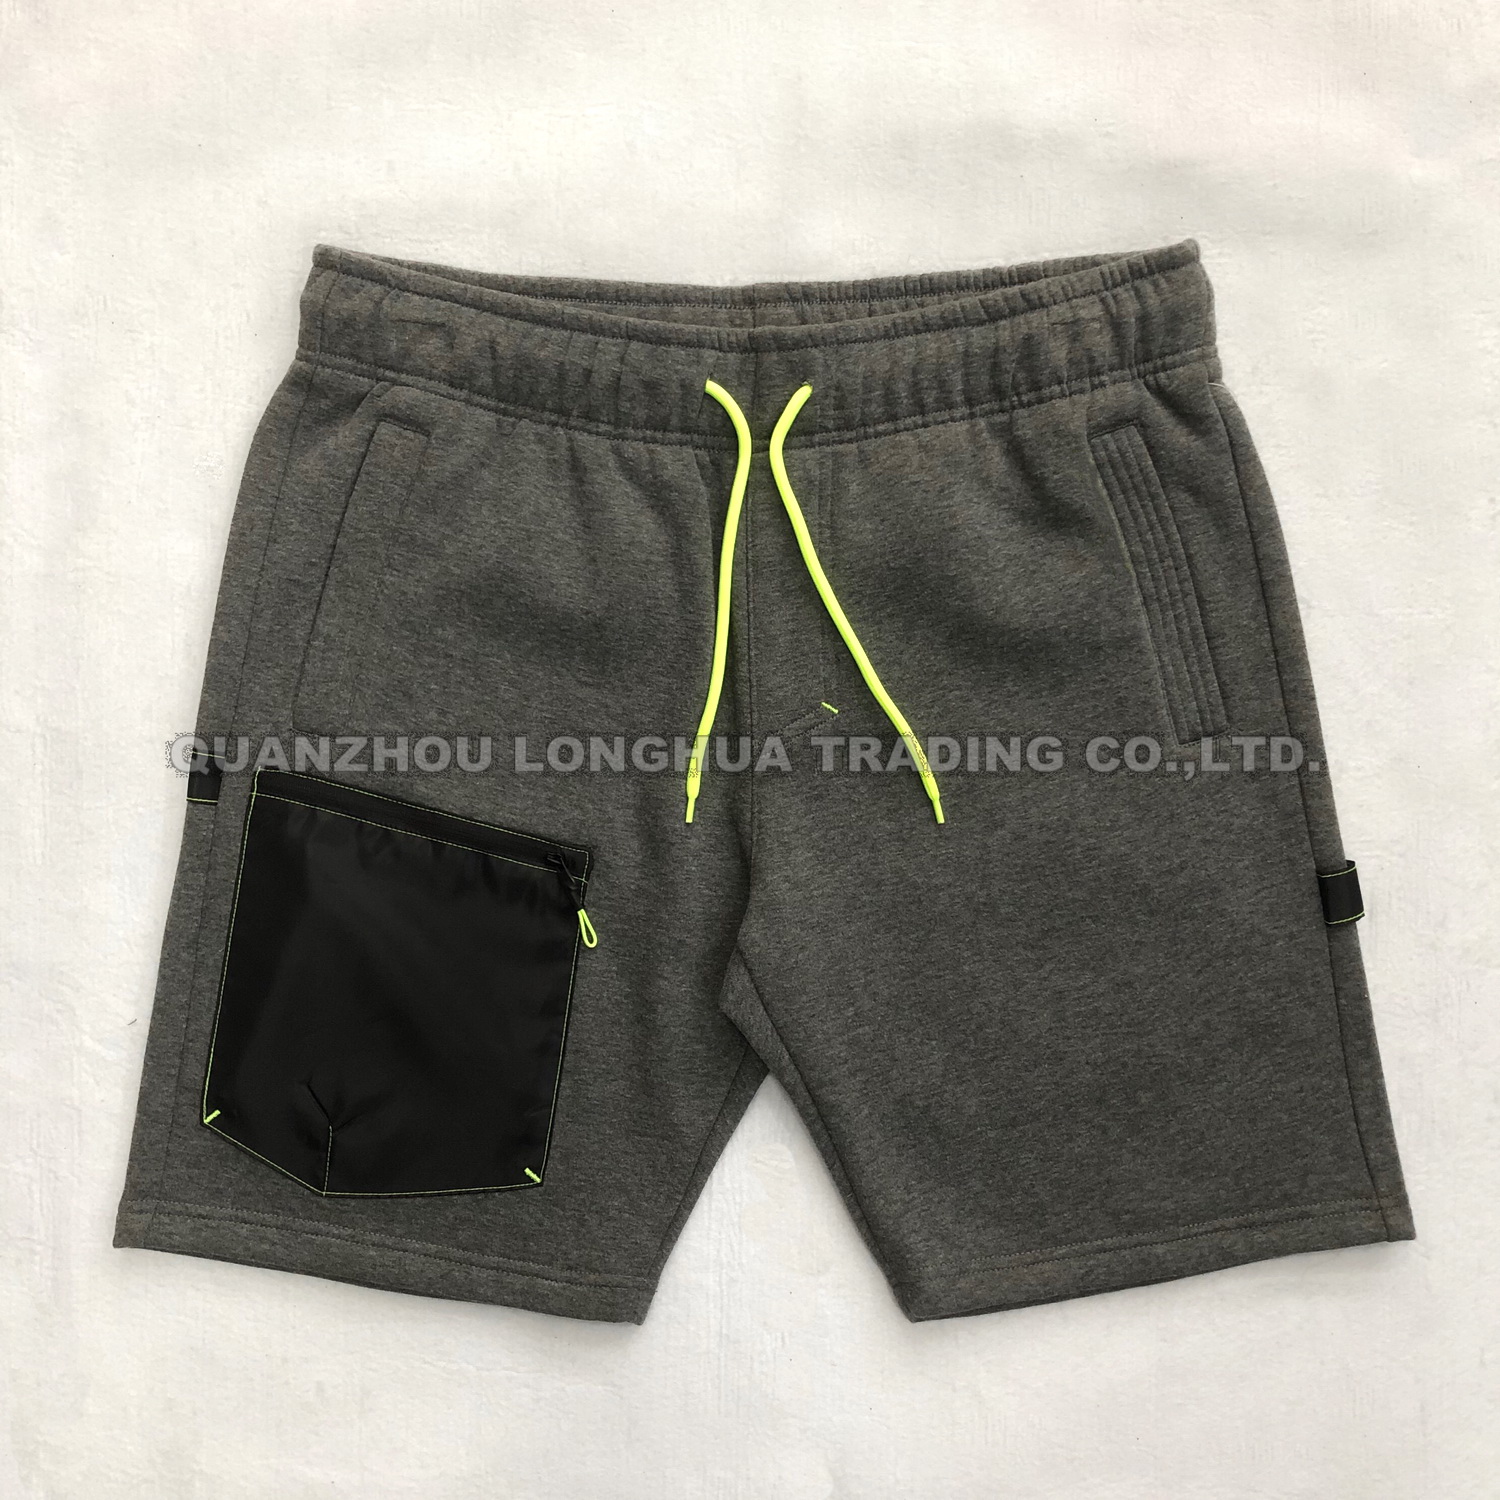 Men′s Boy′s Knitting Shorts Tc Fleece Oxford Fabric with PU Coating Apparel Jeans Trousers Kids Wear Pants Knitwear